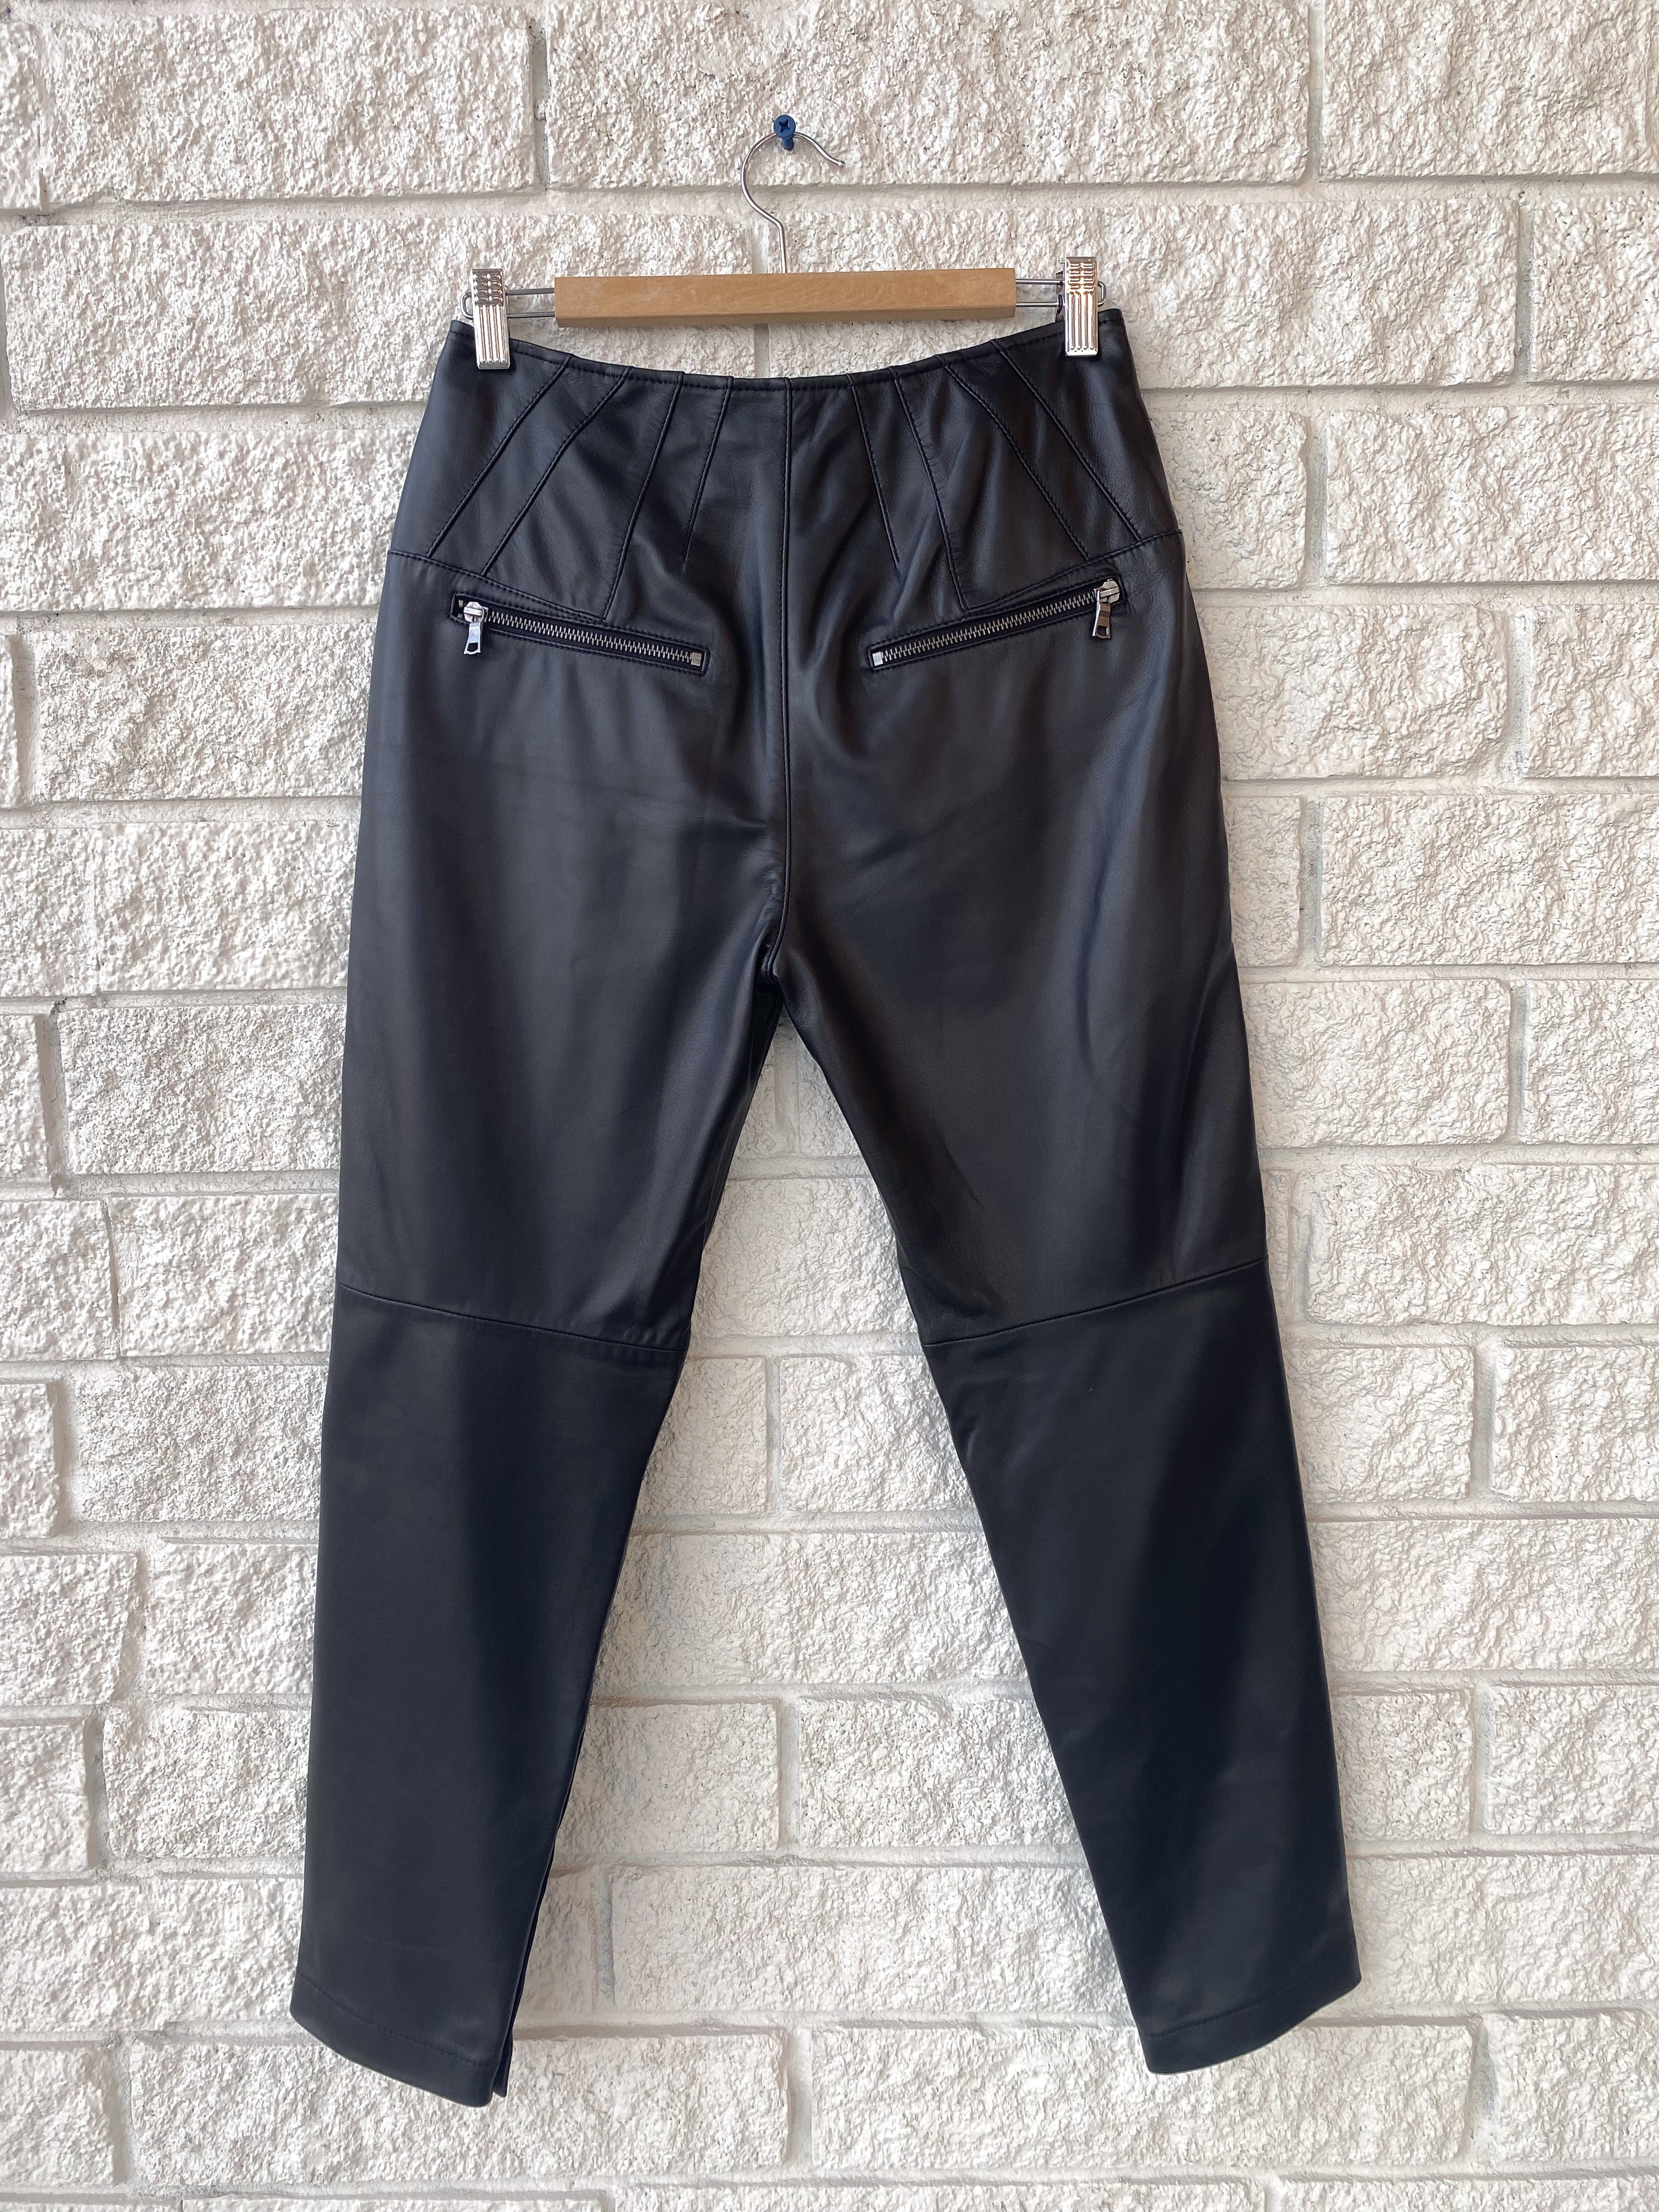 Makayla Full Length Leather Pant